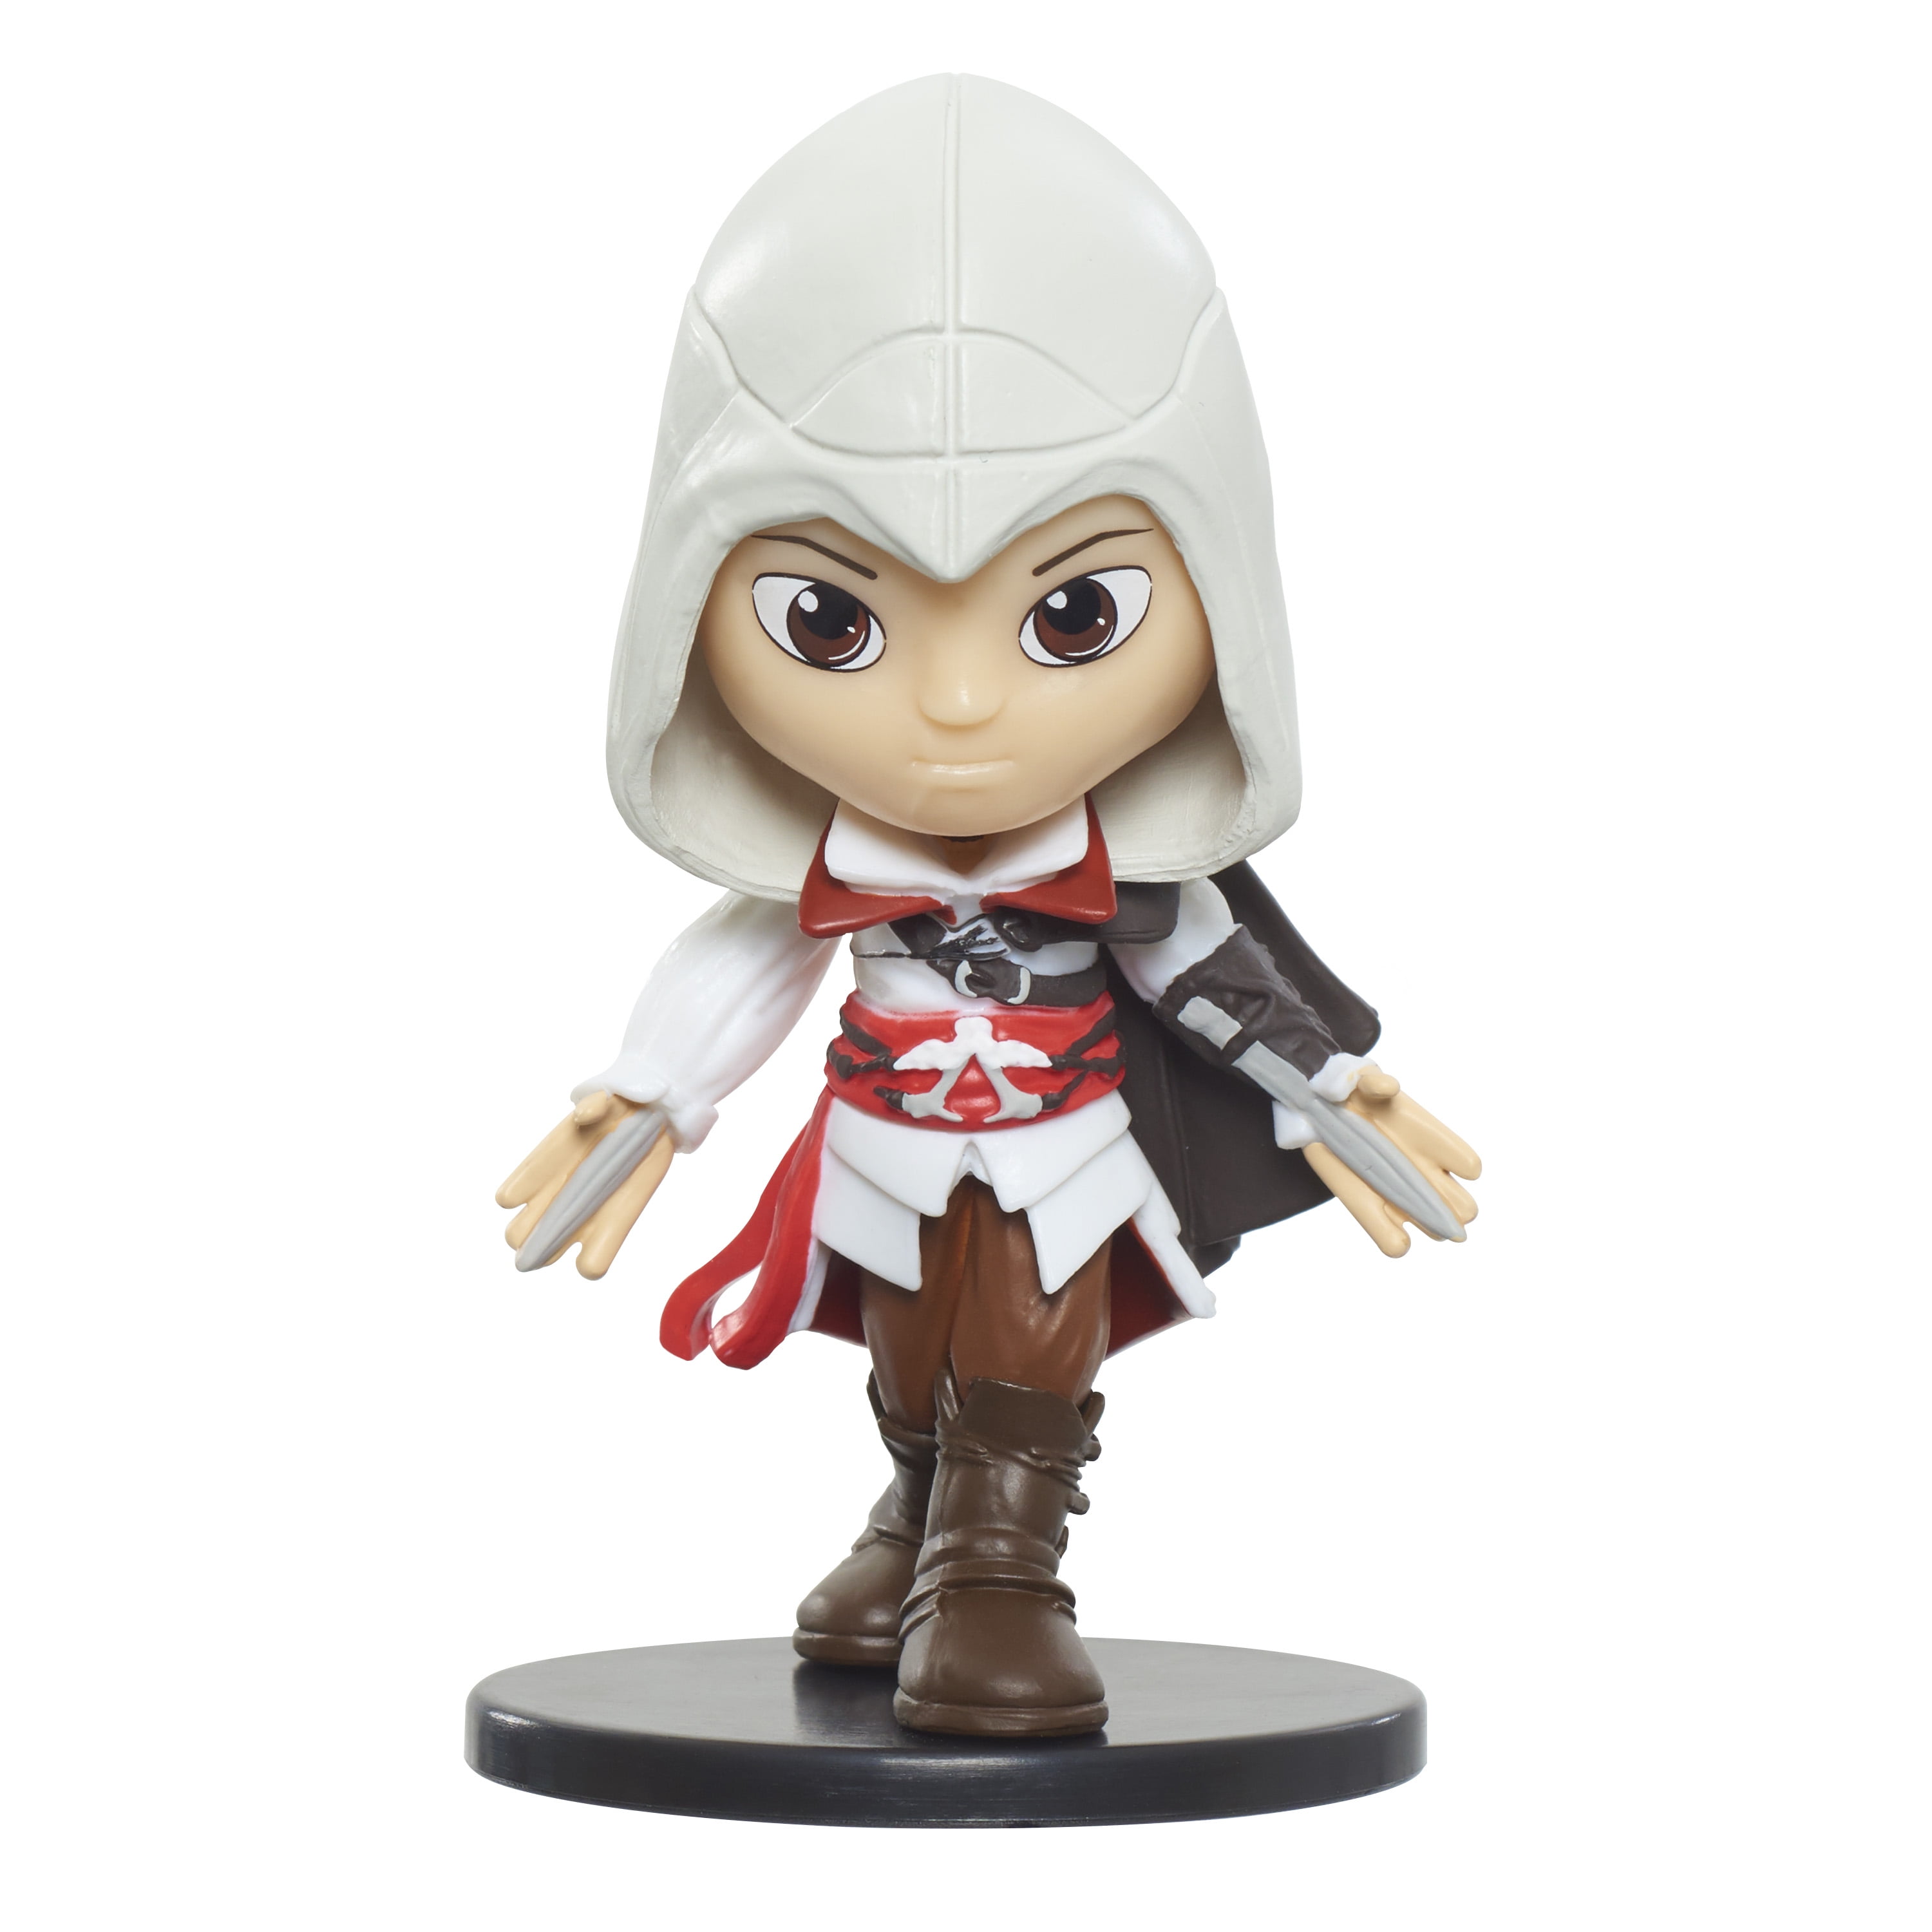 Edward Ubisoft Assassin/'s Creed Stylized Collectible Figure